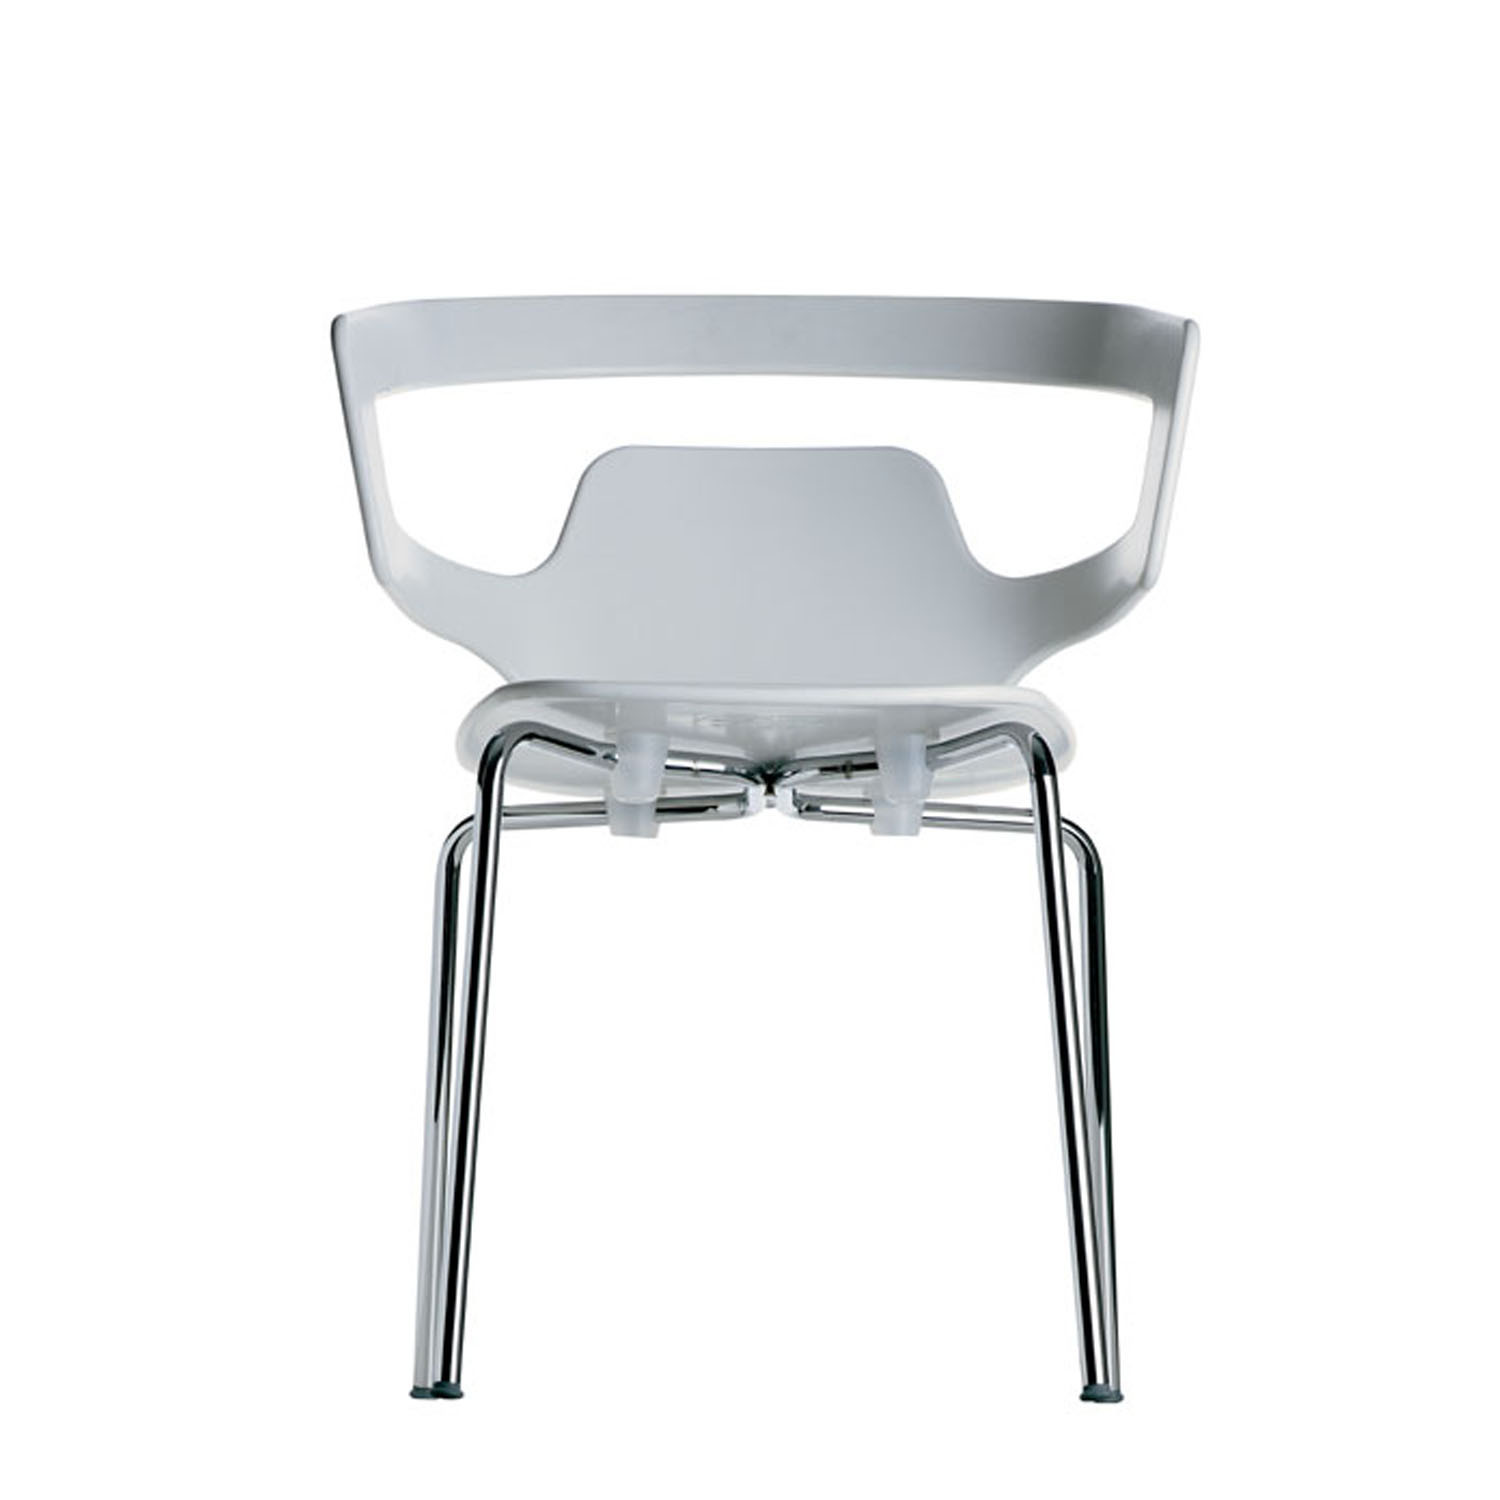 Segesta Chair - back detail